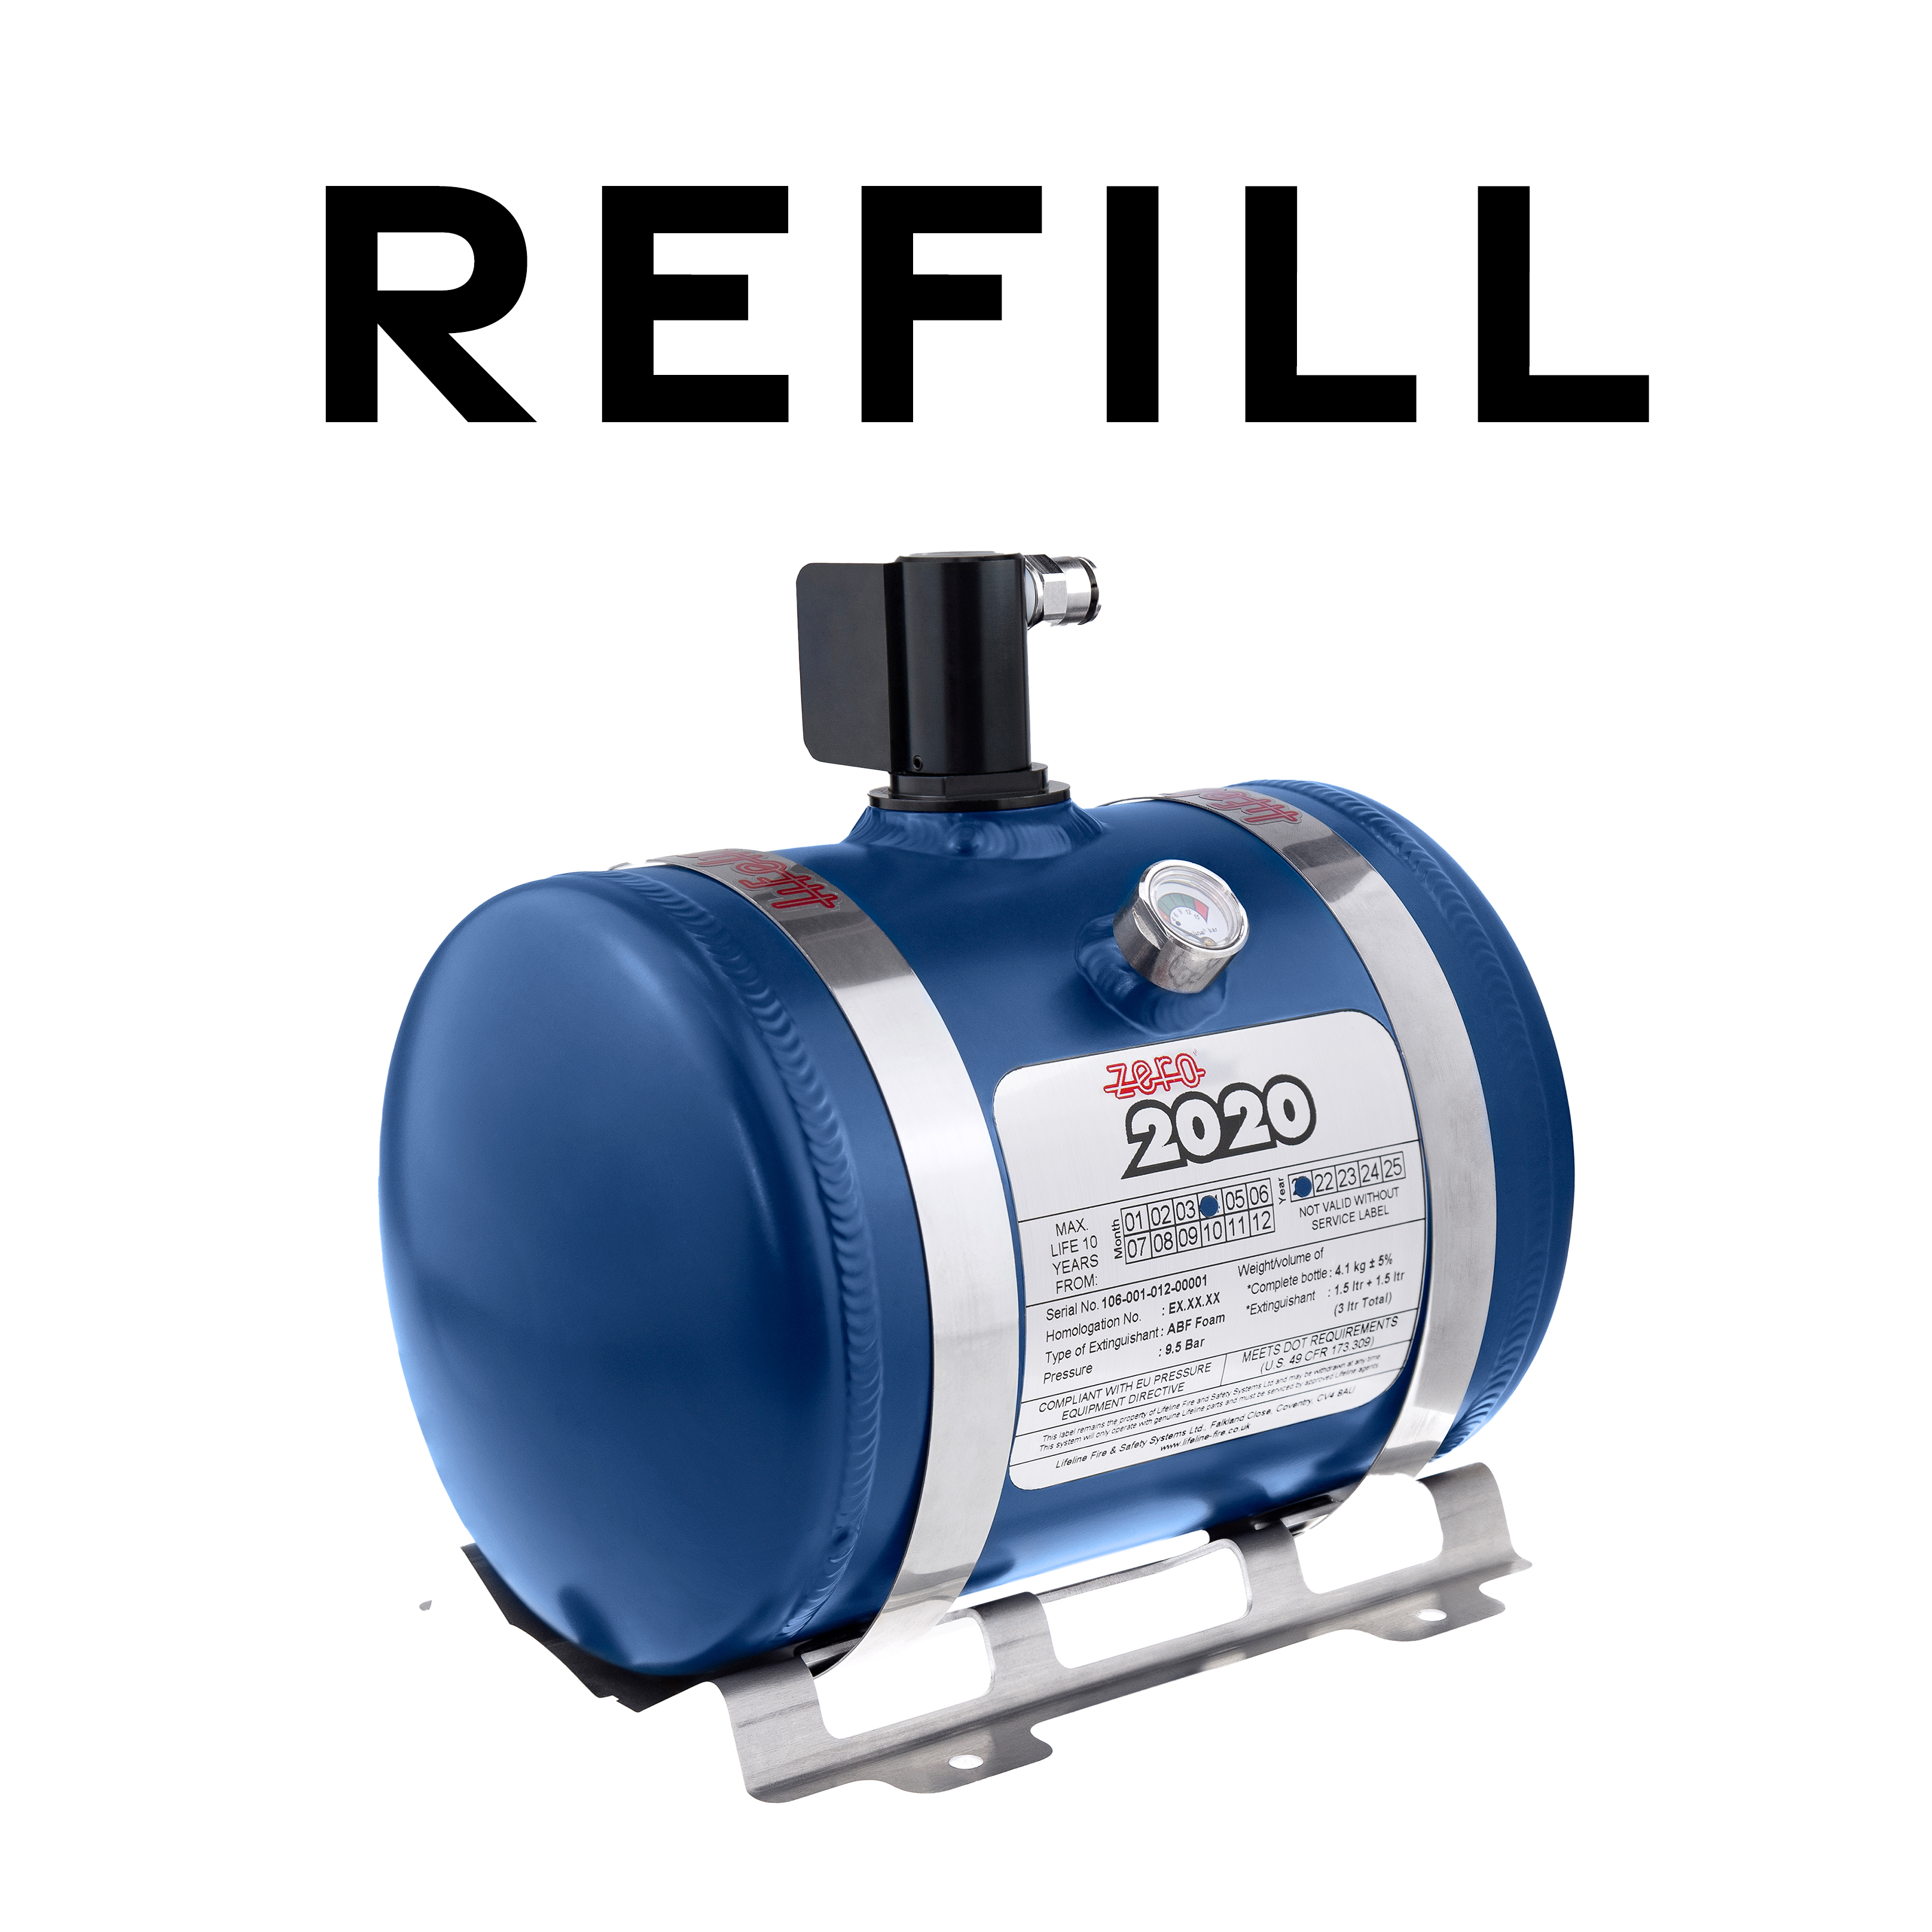 Refill - Lifeline Zero 2020 3.0 Litre Electrical Fire Extinguisher